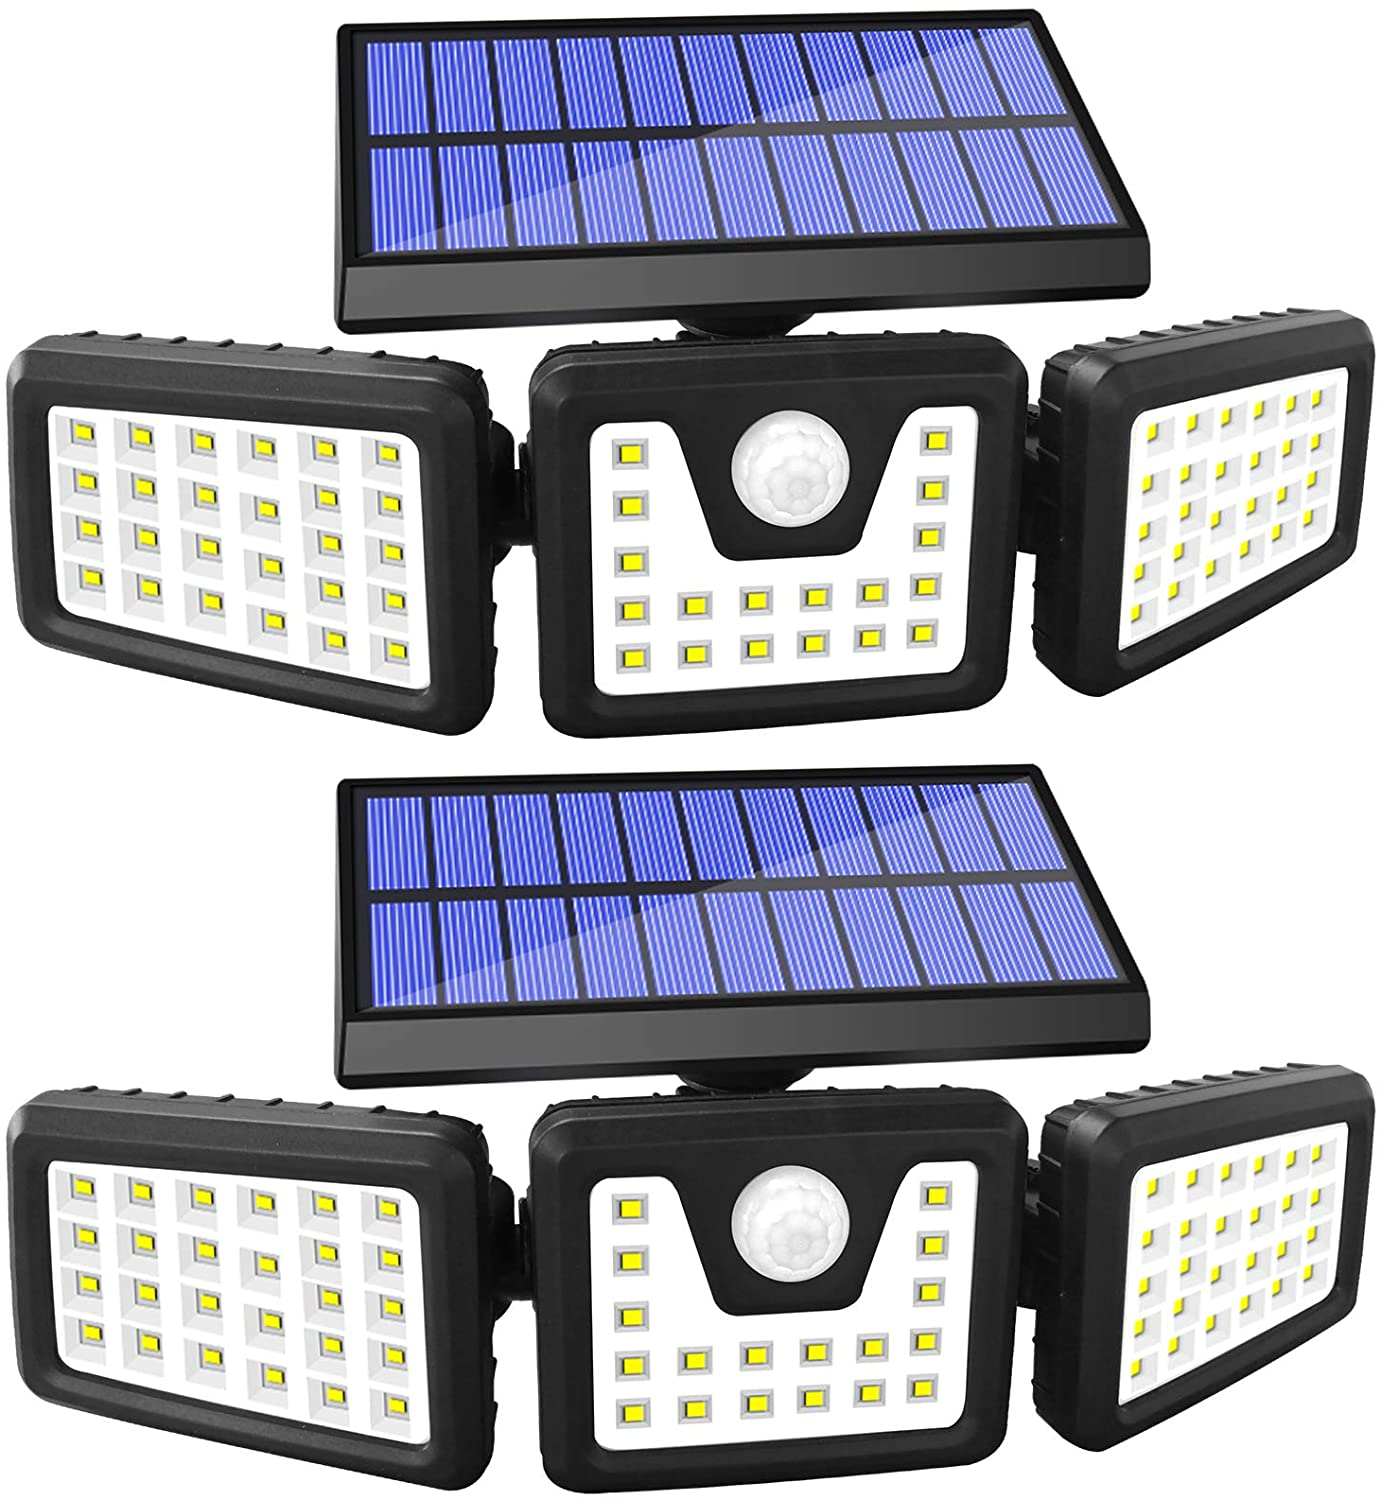 GSBLUNIE Solar Motion Sensor Lights Outdoor, 70 LED Solar Security Lights Outdoor, Adjustable 3 Heads, IP65 Waterproof, 800LM Flood Light for Yard, Garage, Garden $26.99